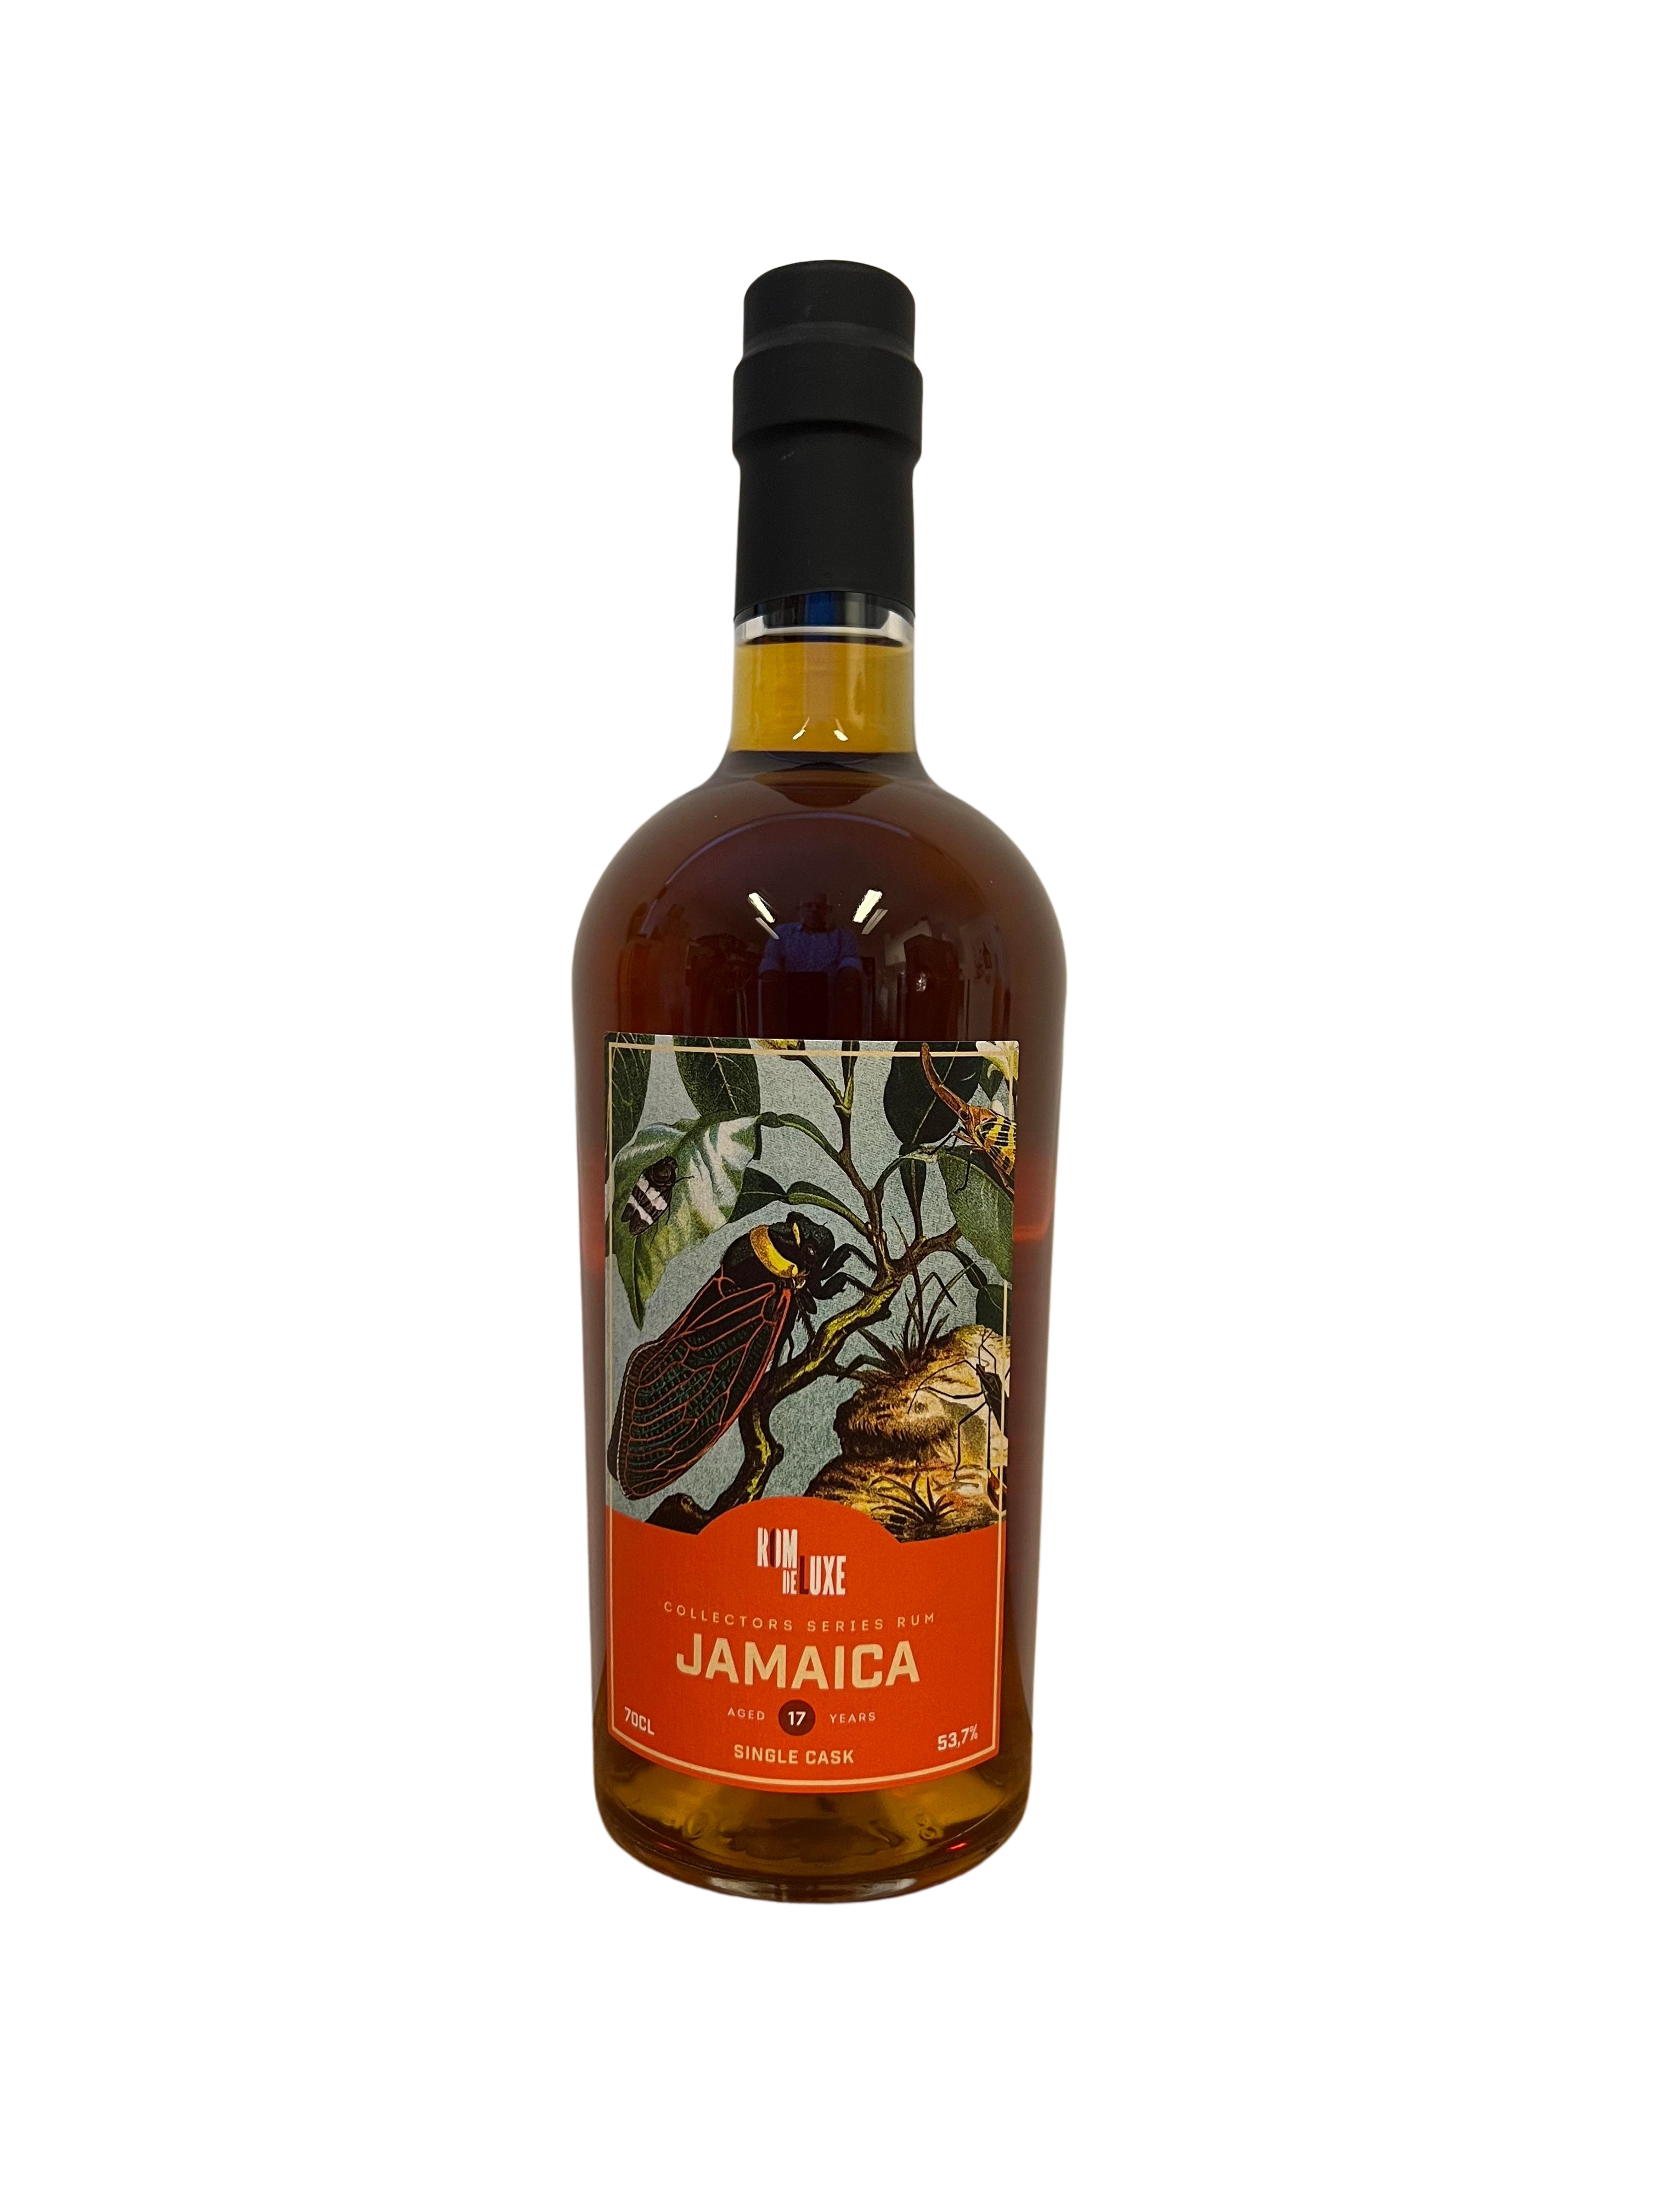 Collectors Series Rum n.15 Jamaica 17yo - Edizione limitata